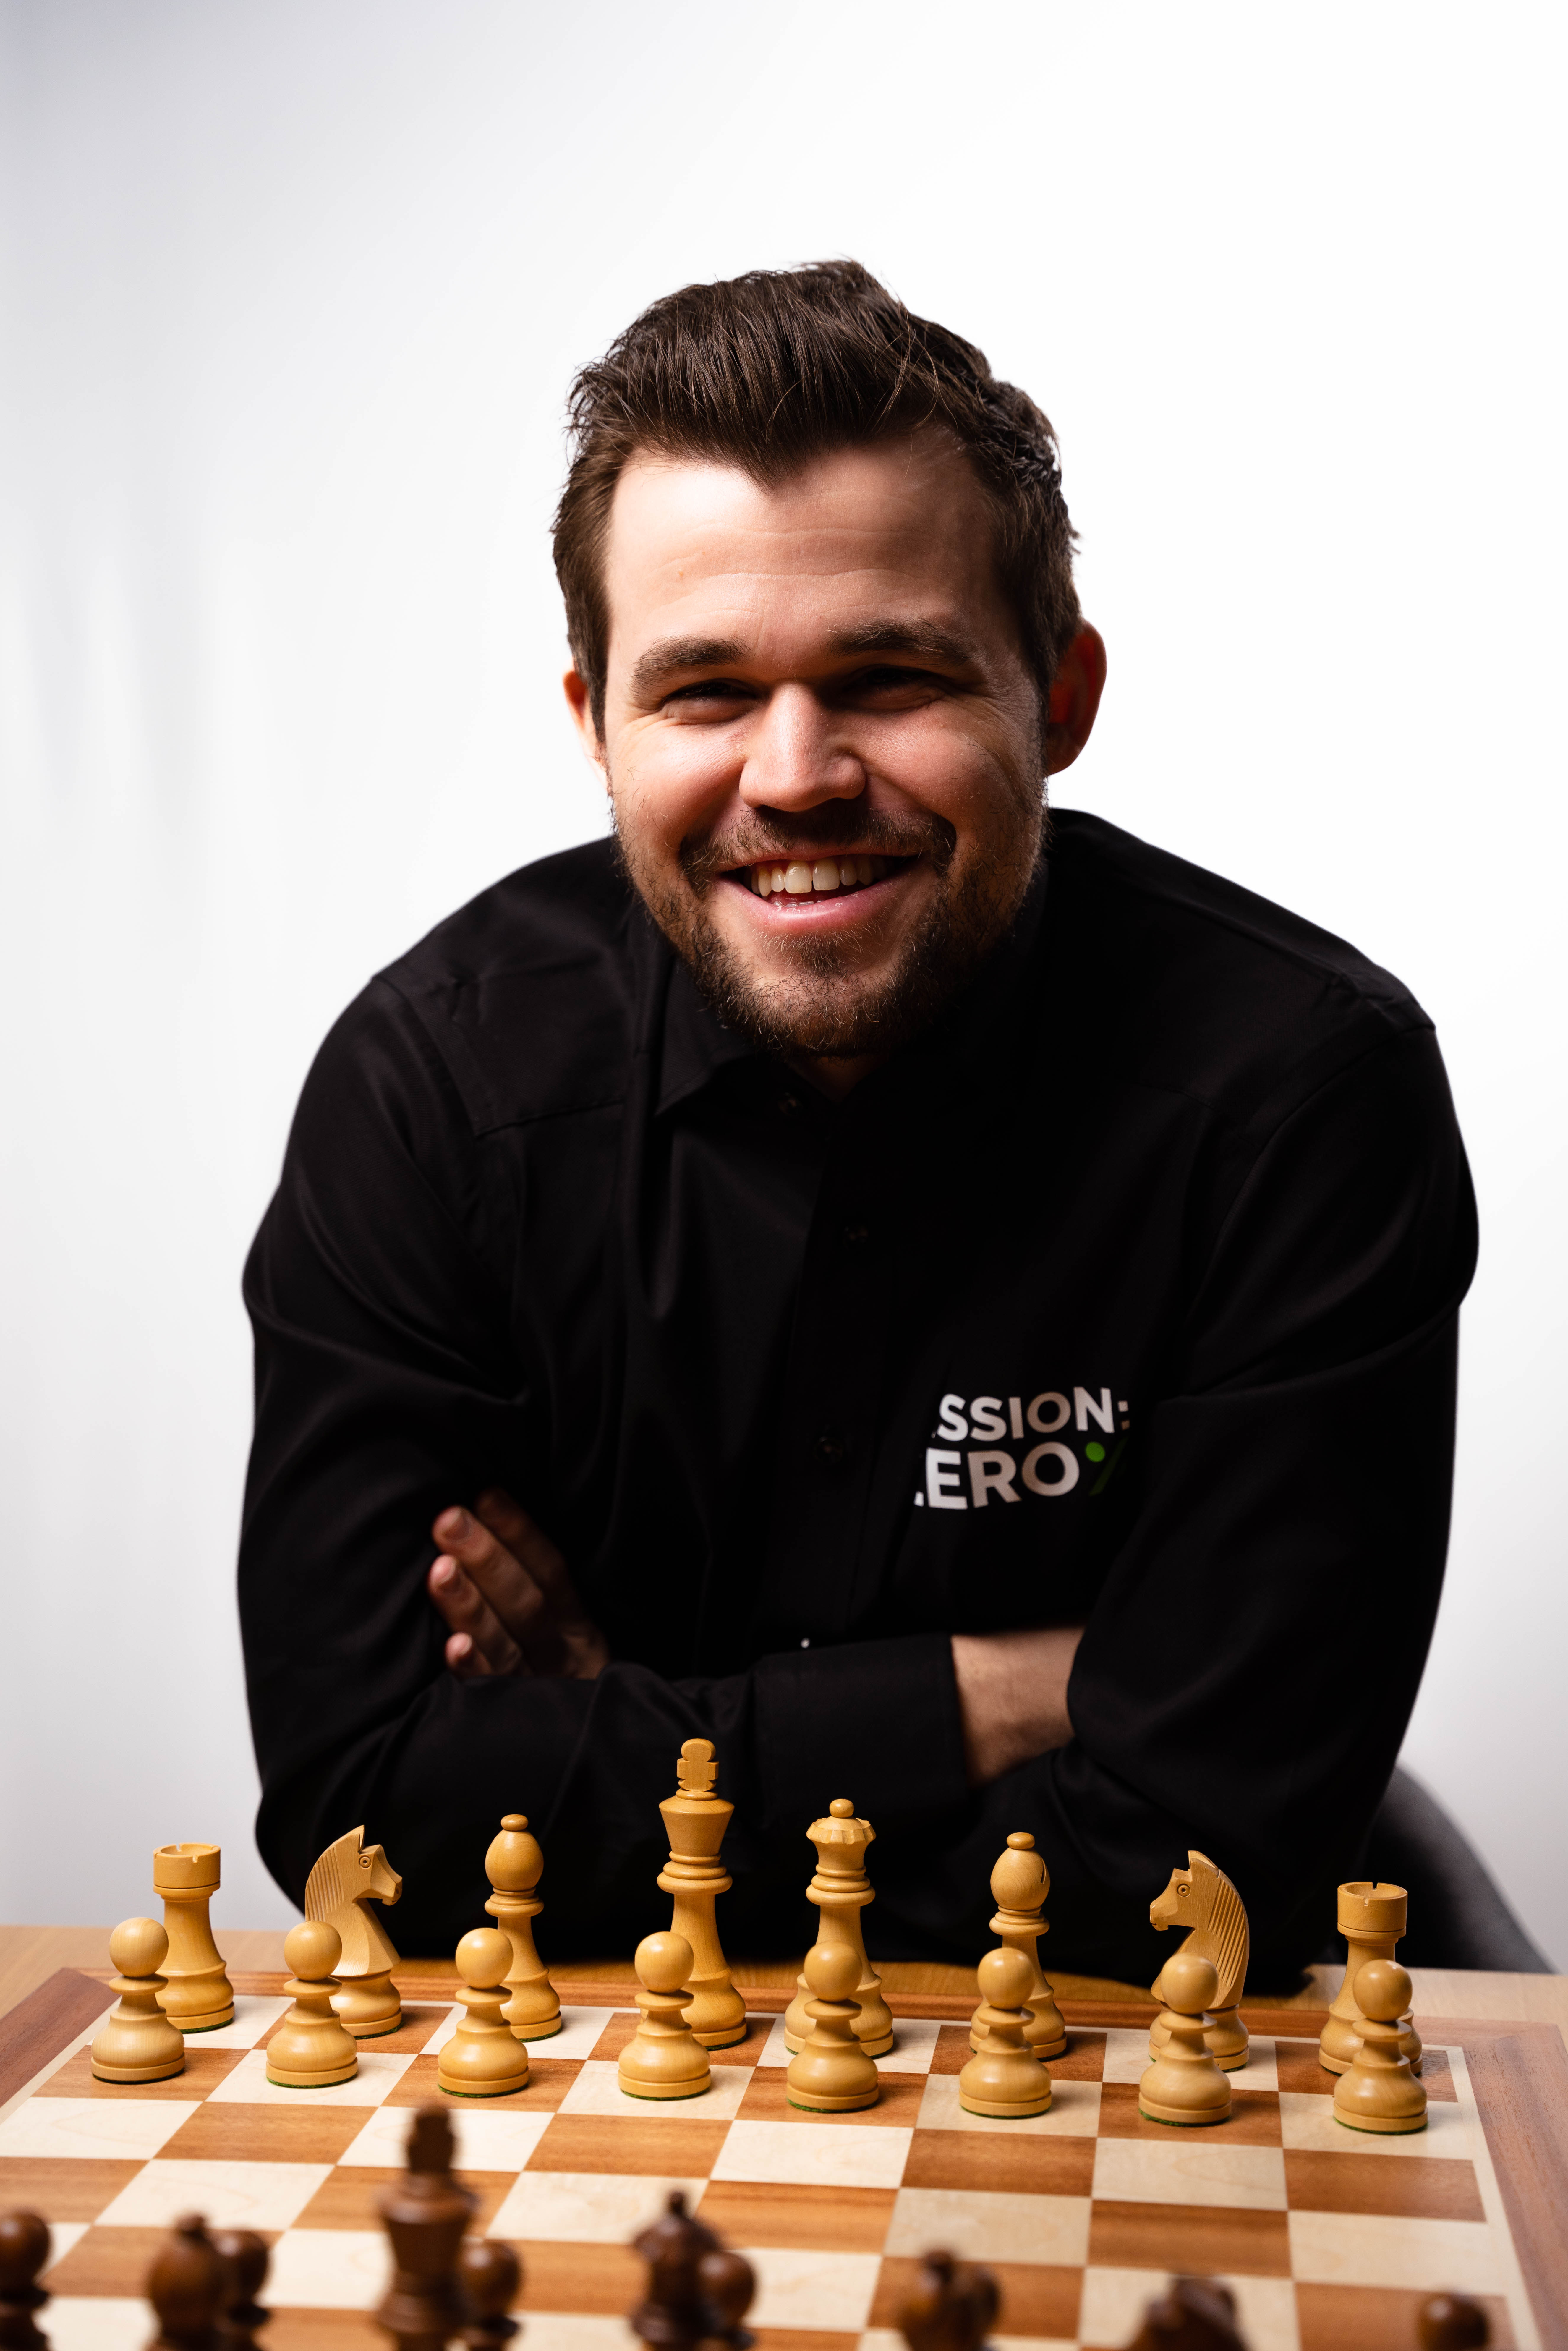 Magnus Carlsen - Magnus Carlsen added a new photo.